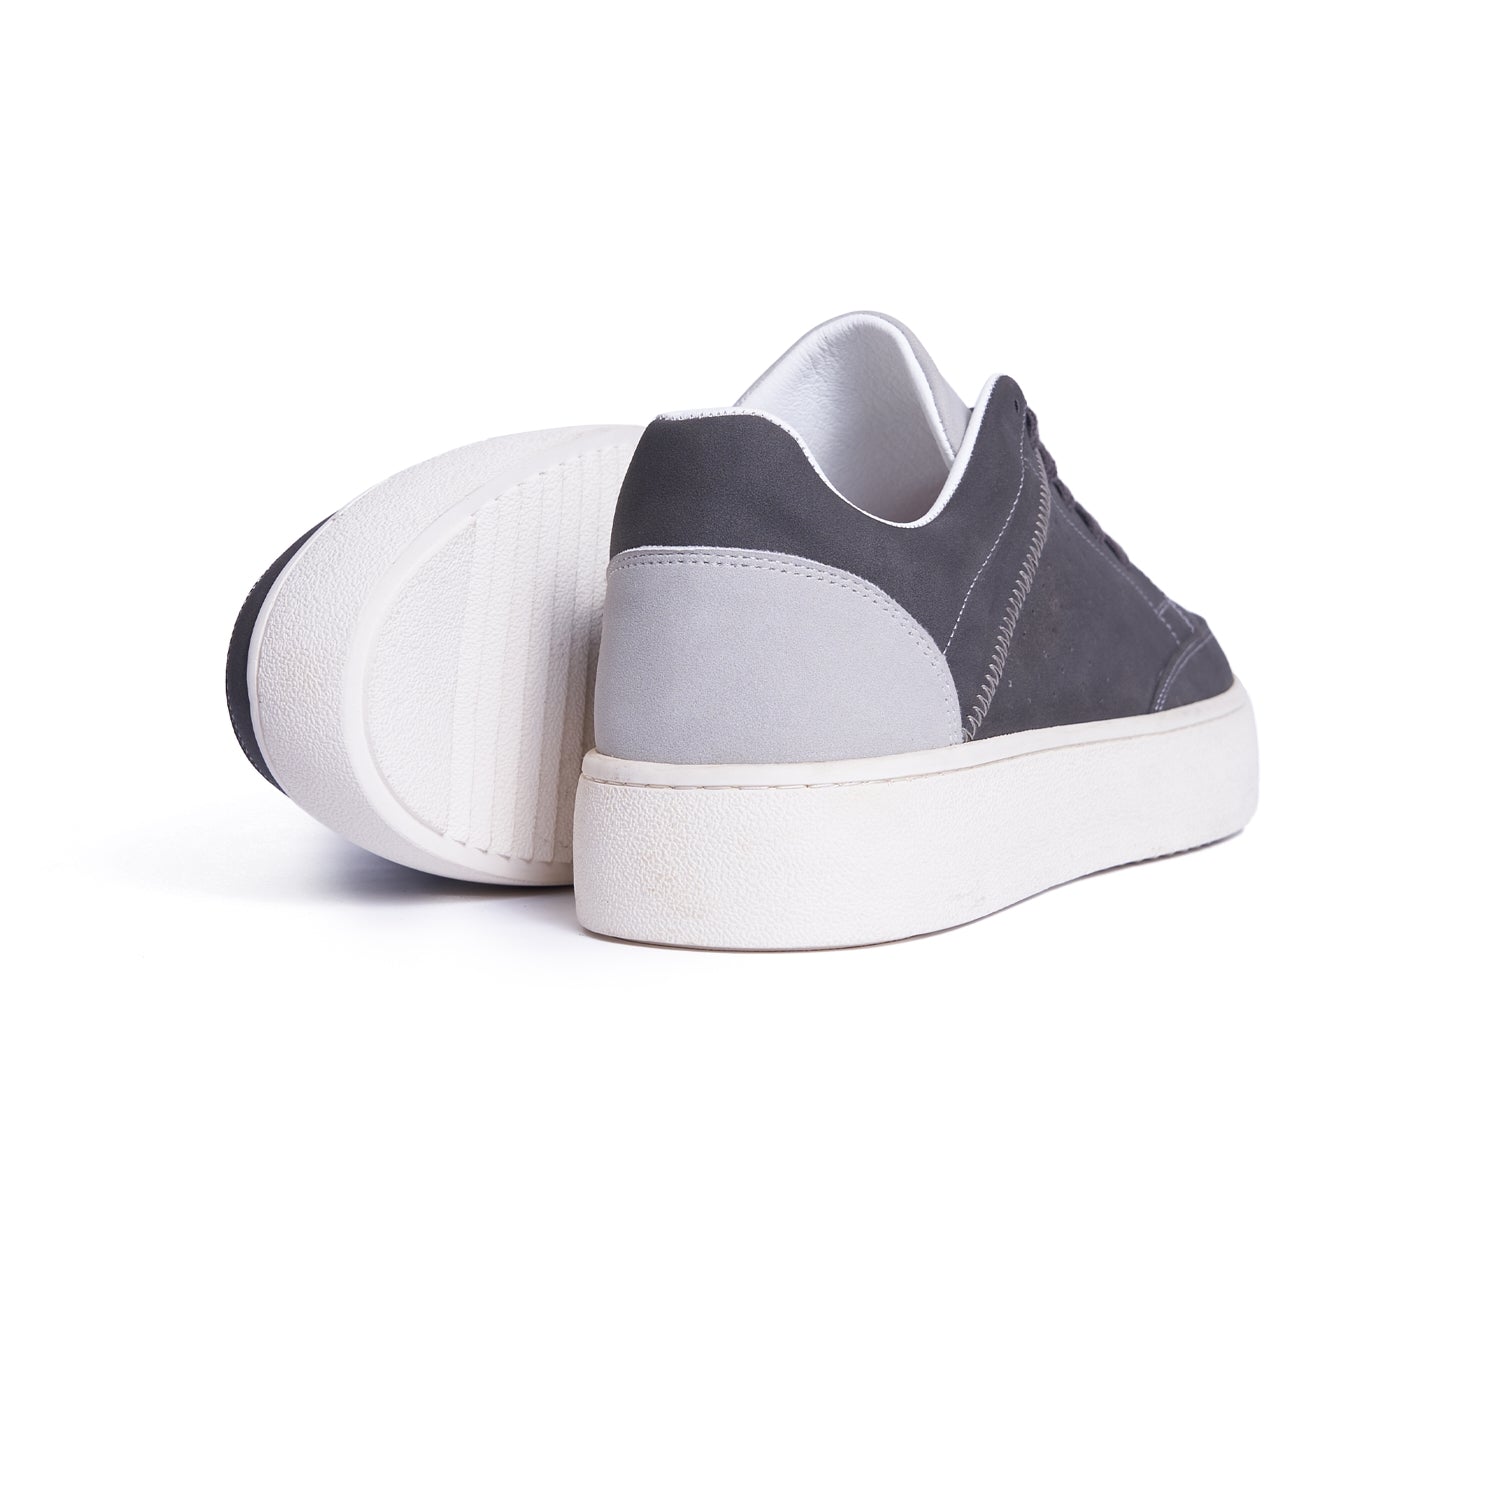 Men's Sleek and Stylish Sneaker - Grey Modern Comfort by Koka Store